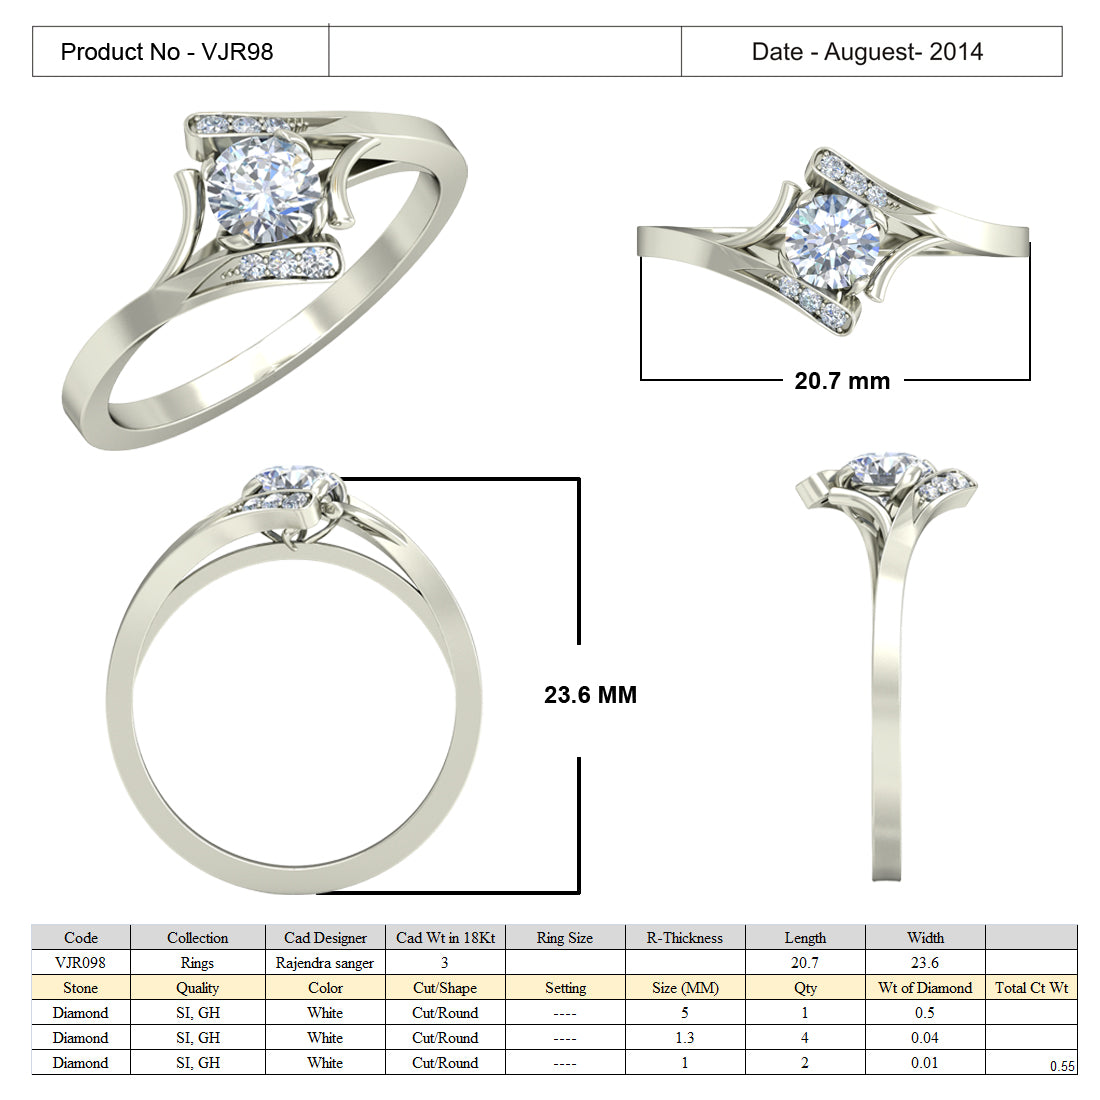 3D Jewelry Files Ring Model 3DM 15=calur ston rings=96